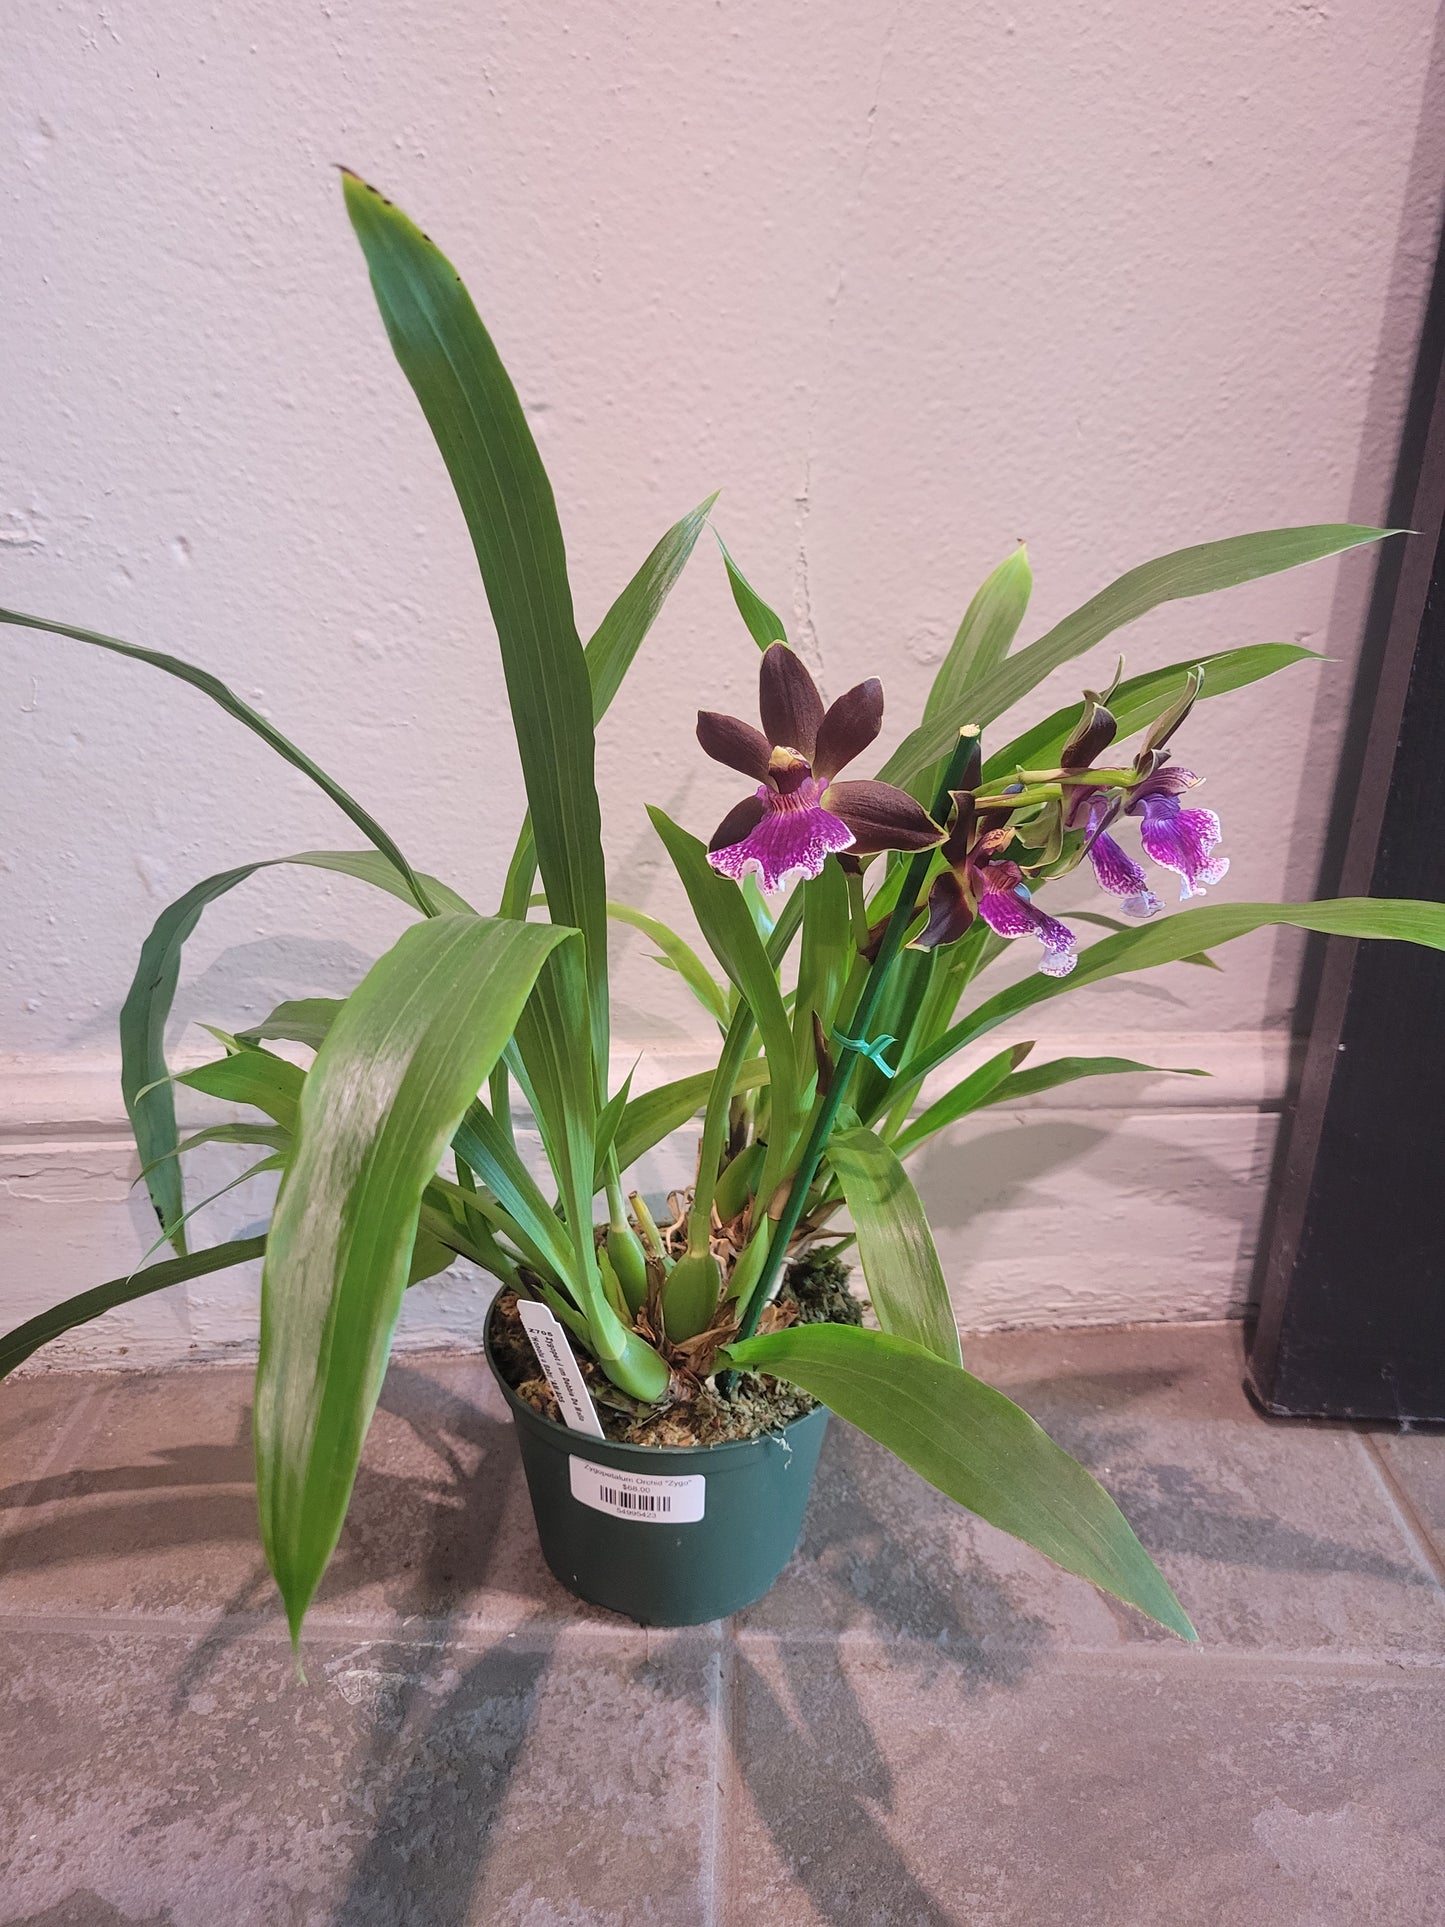 Zygopetalum Orchid "Zygo"